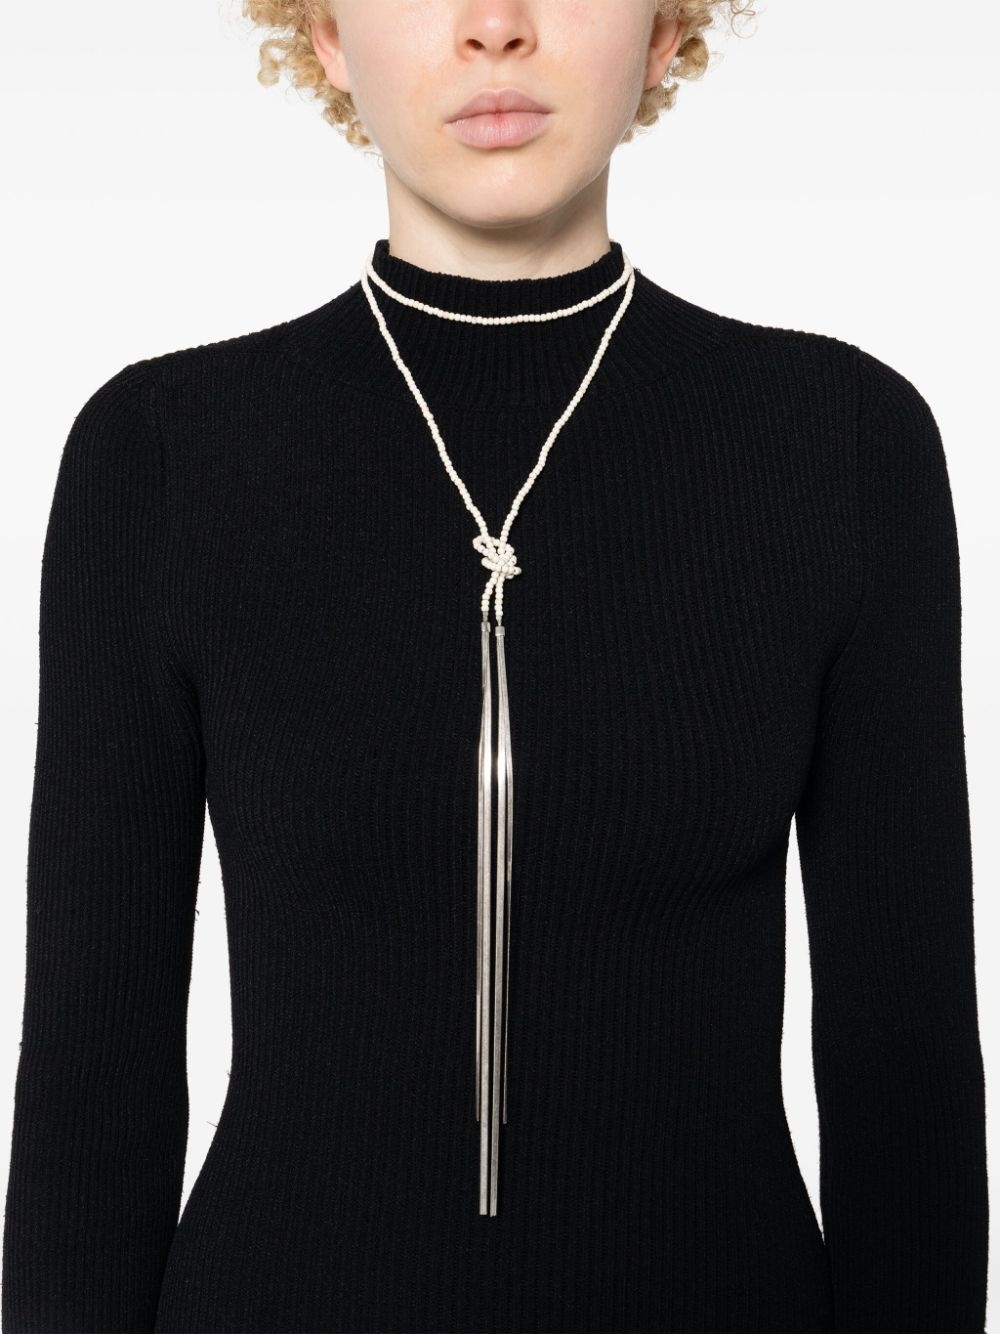 Emi beaded necklace - 2